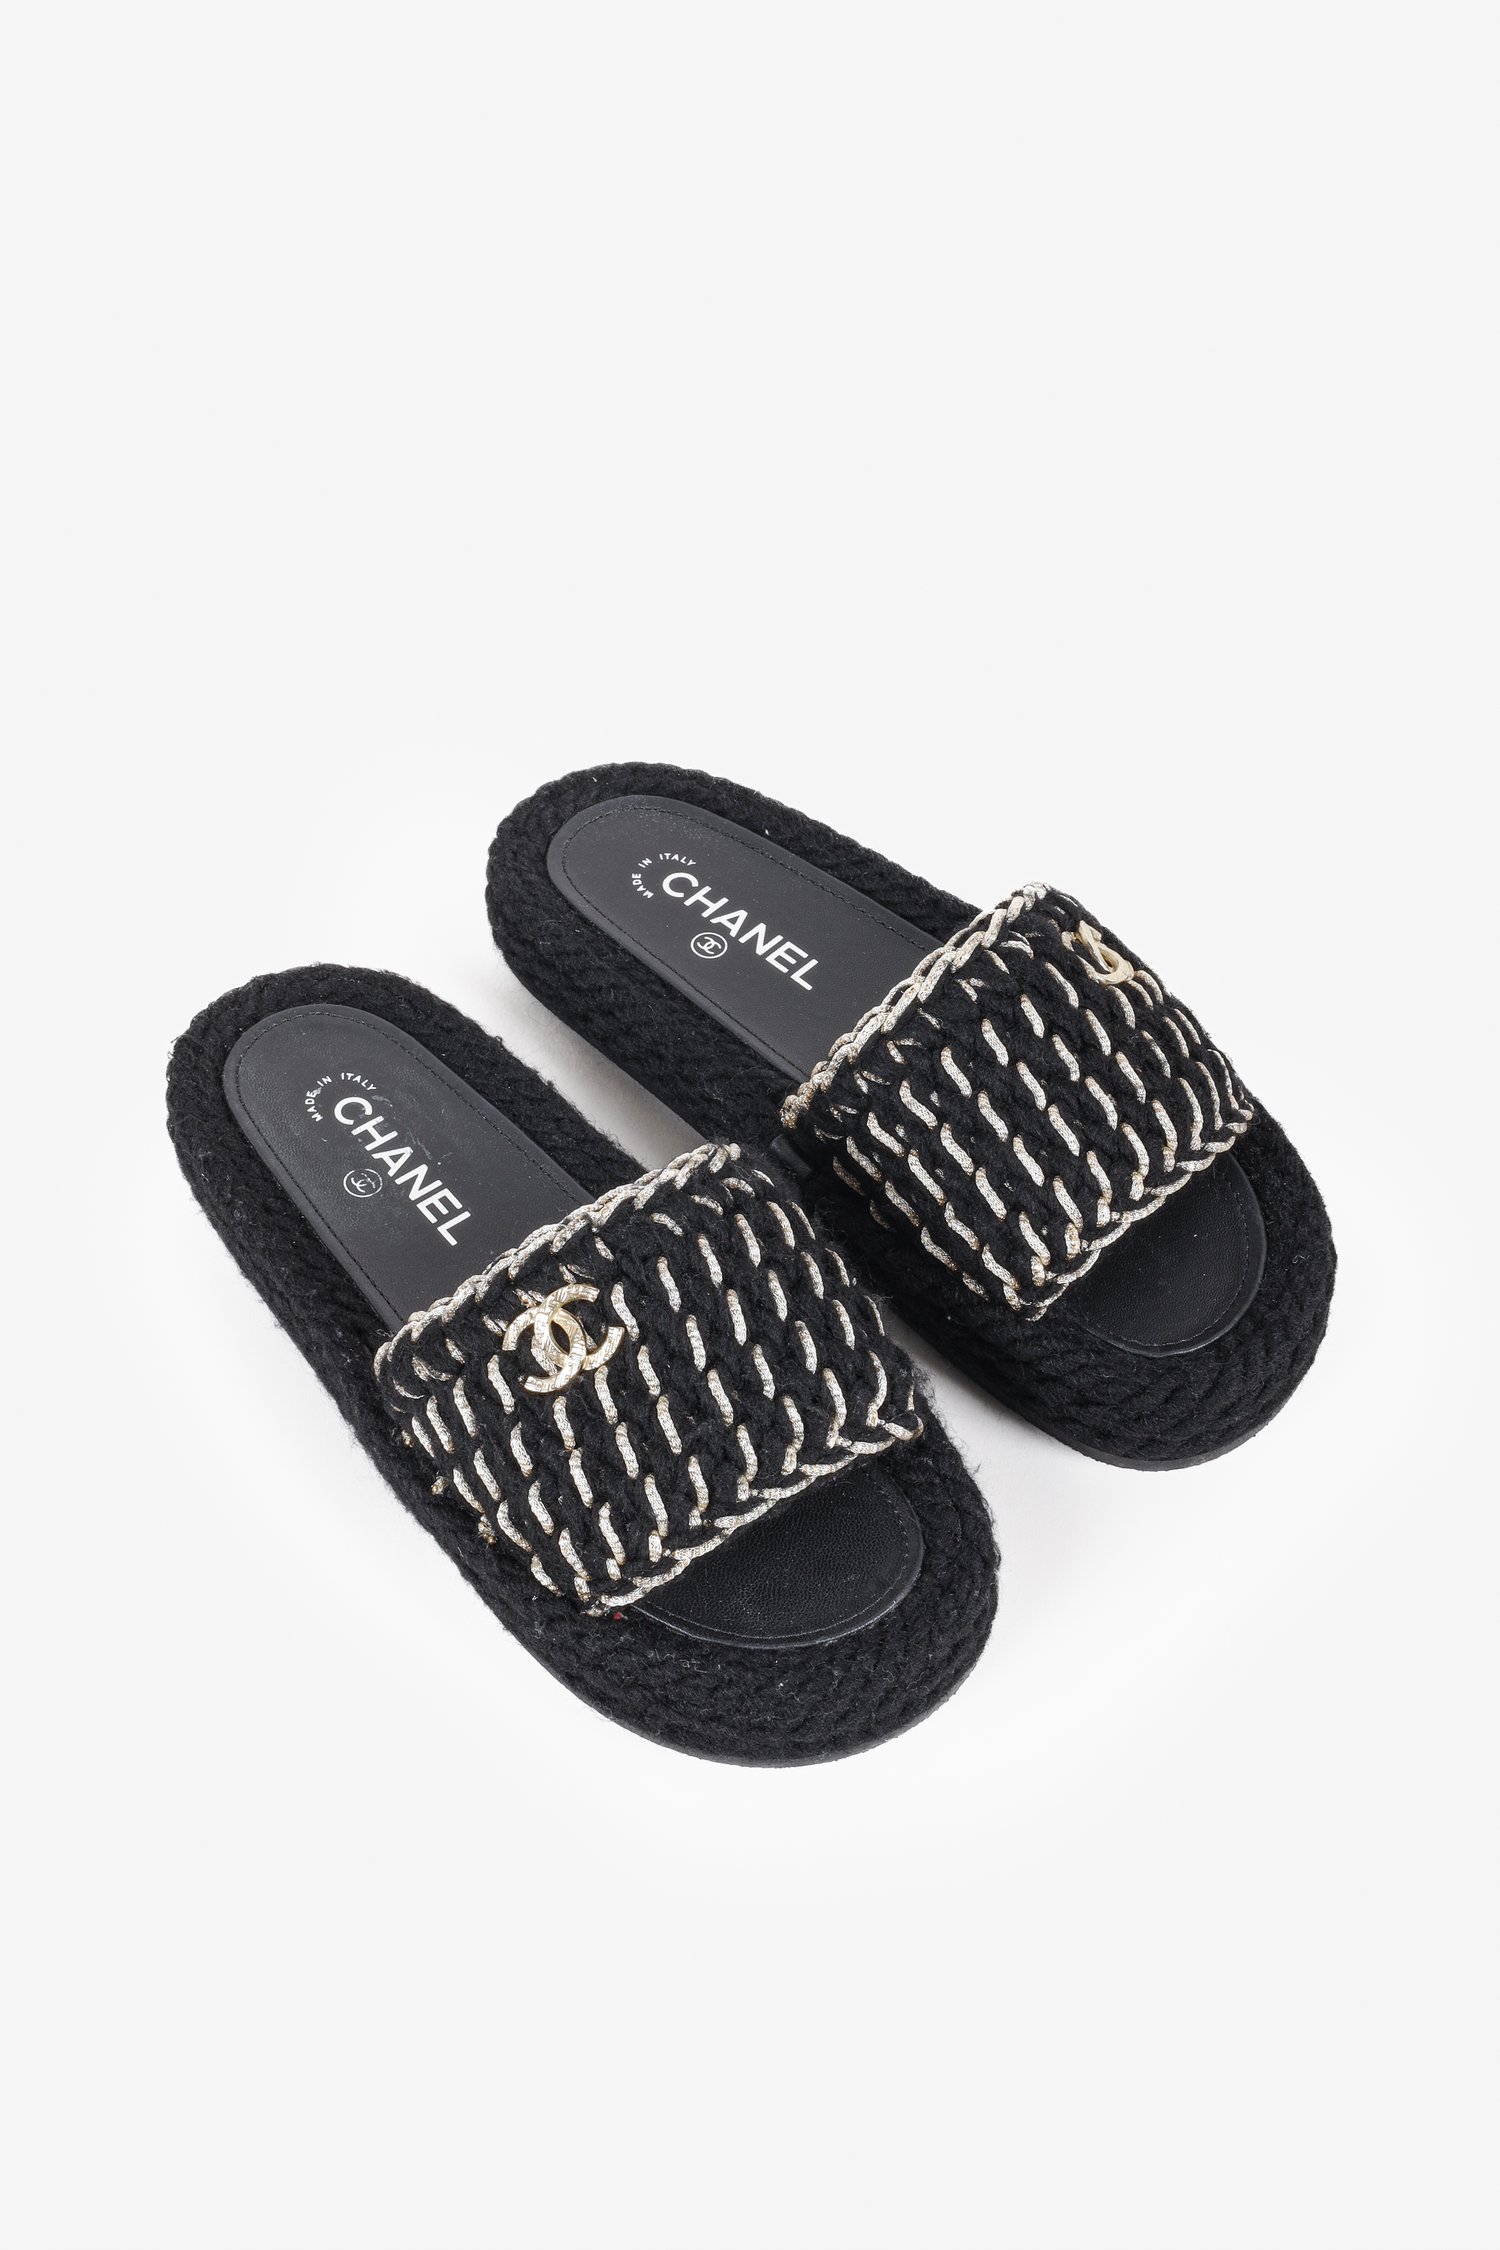 Chanel 2022 Interlocking CC Logo Slides - Black Sandals, Shoes - CHA877967